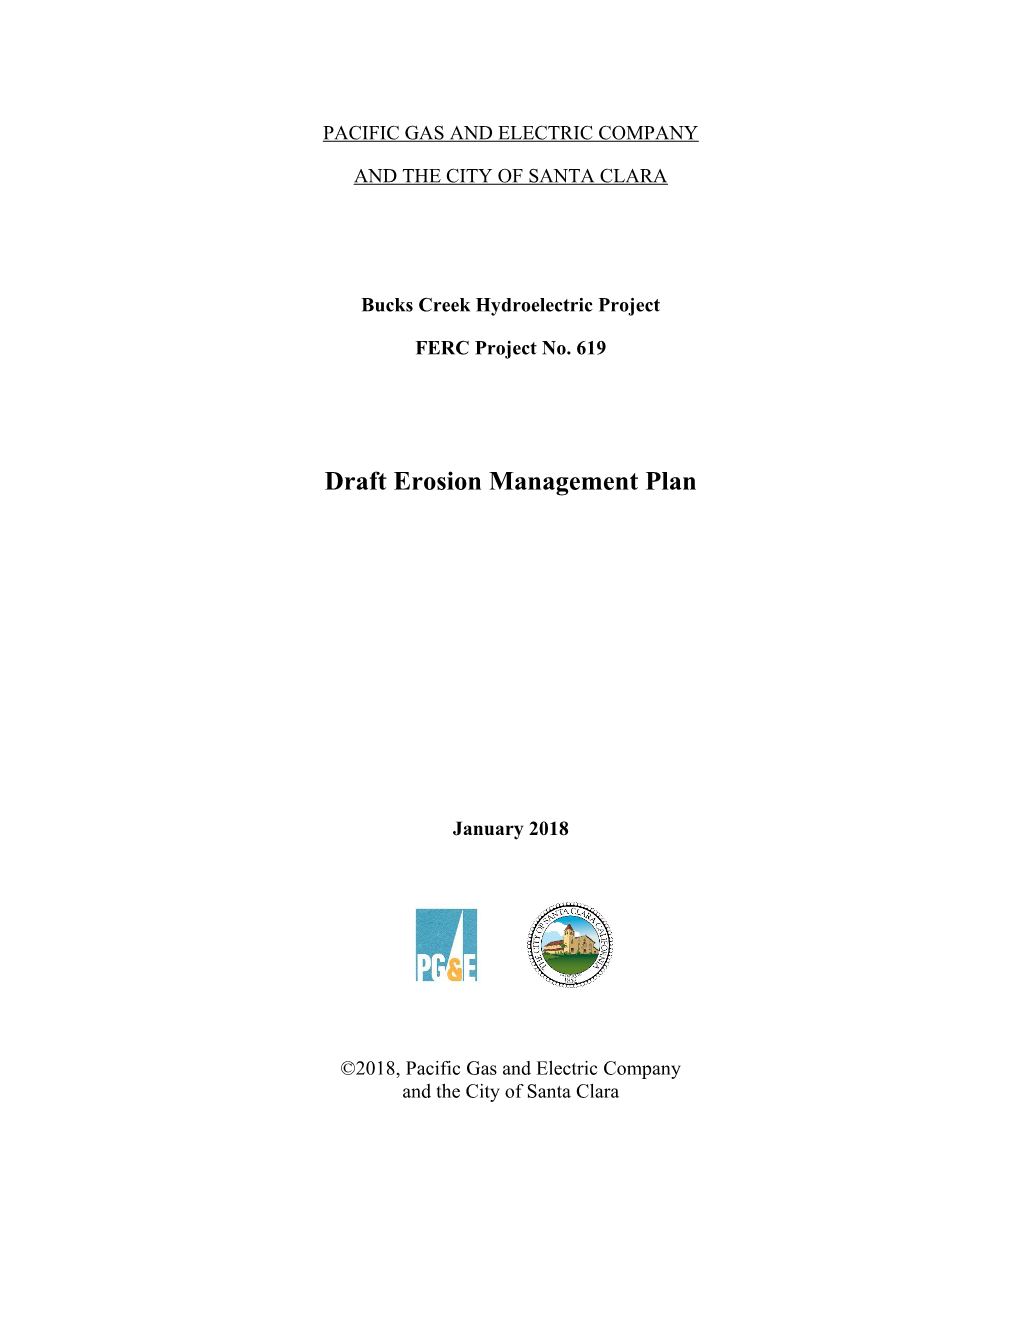 Bucks Creek Erosion Plan DRAFT 20180104 PGE SC